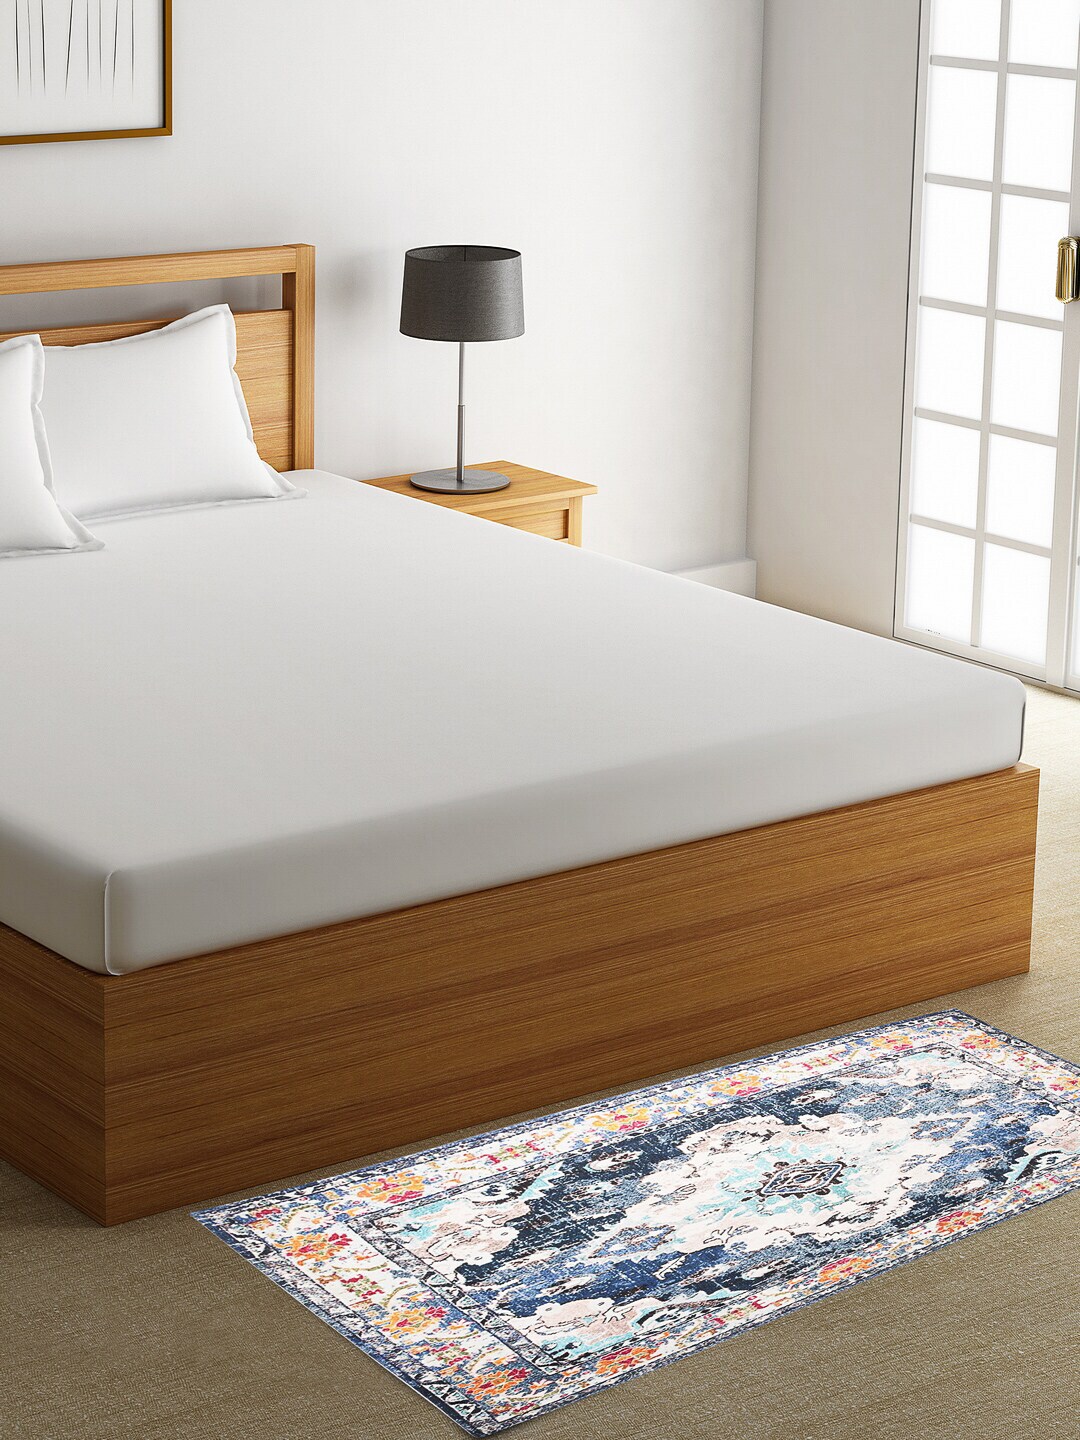 ROMEE Unisex Blue & White Ethnic Patterned Bed Side Floor Runner Price in India